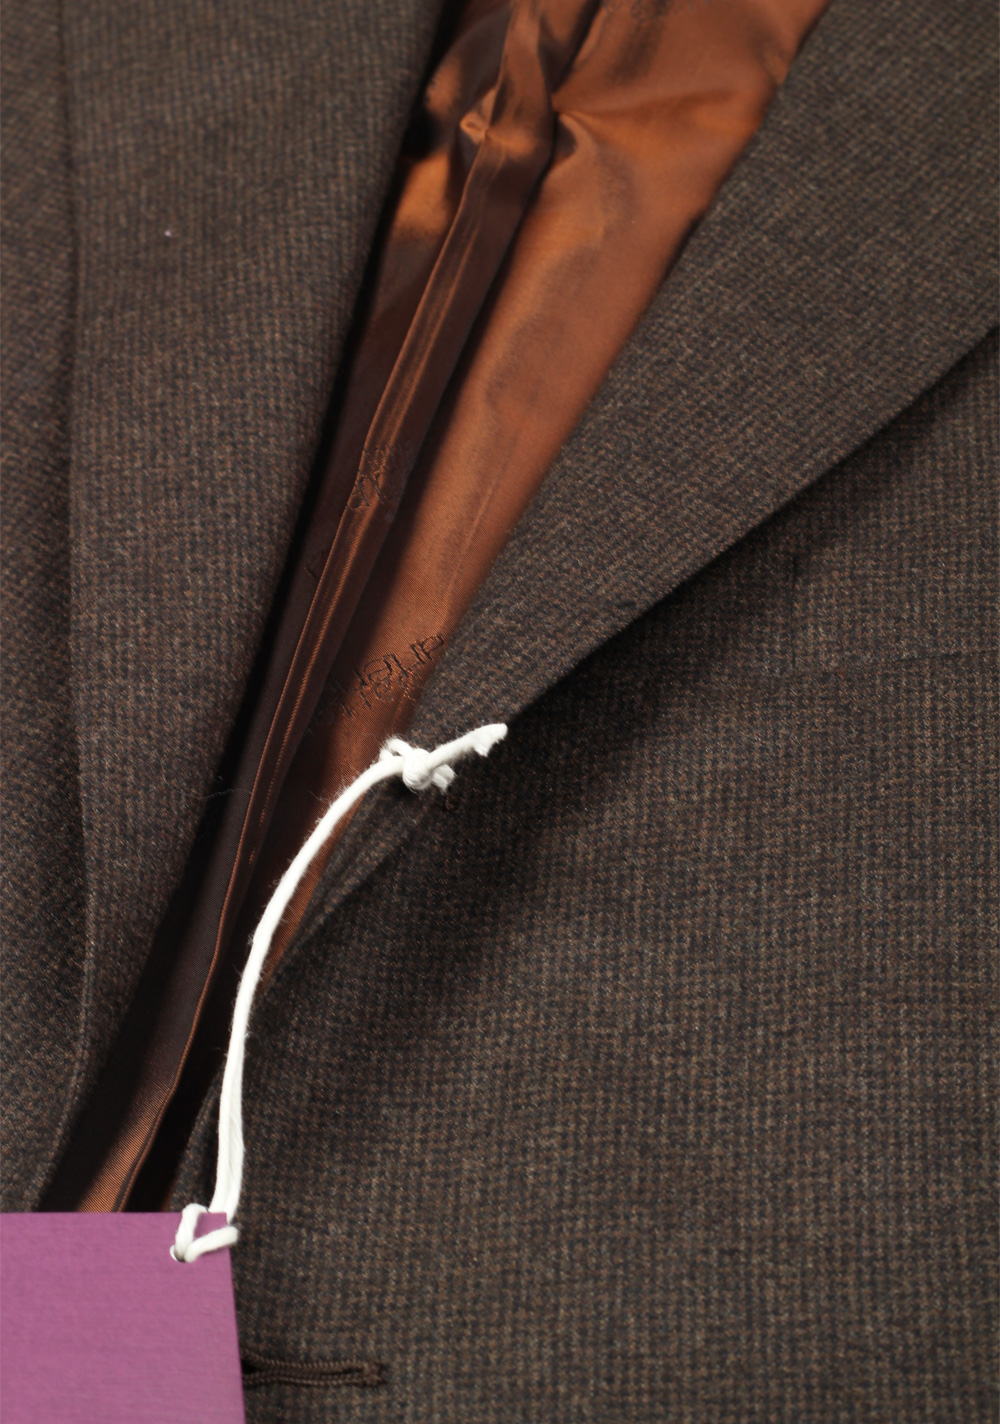 Sartoria Partenopea Brown Suit Size 56 / 46R U.S. In Wool | Costume Limité